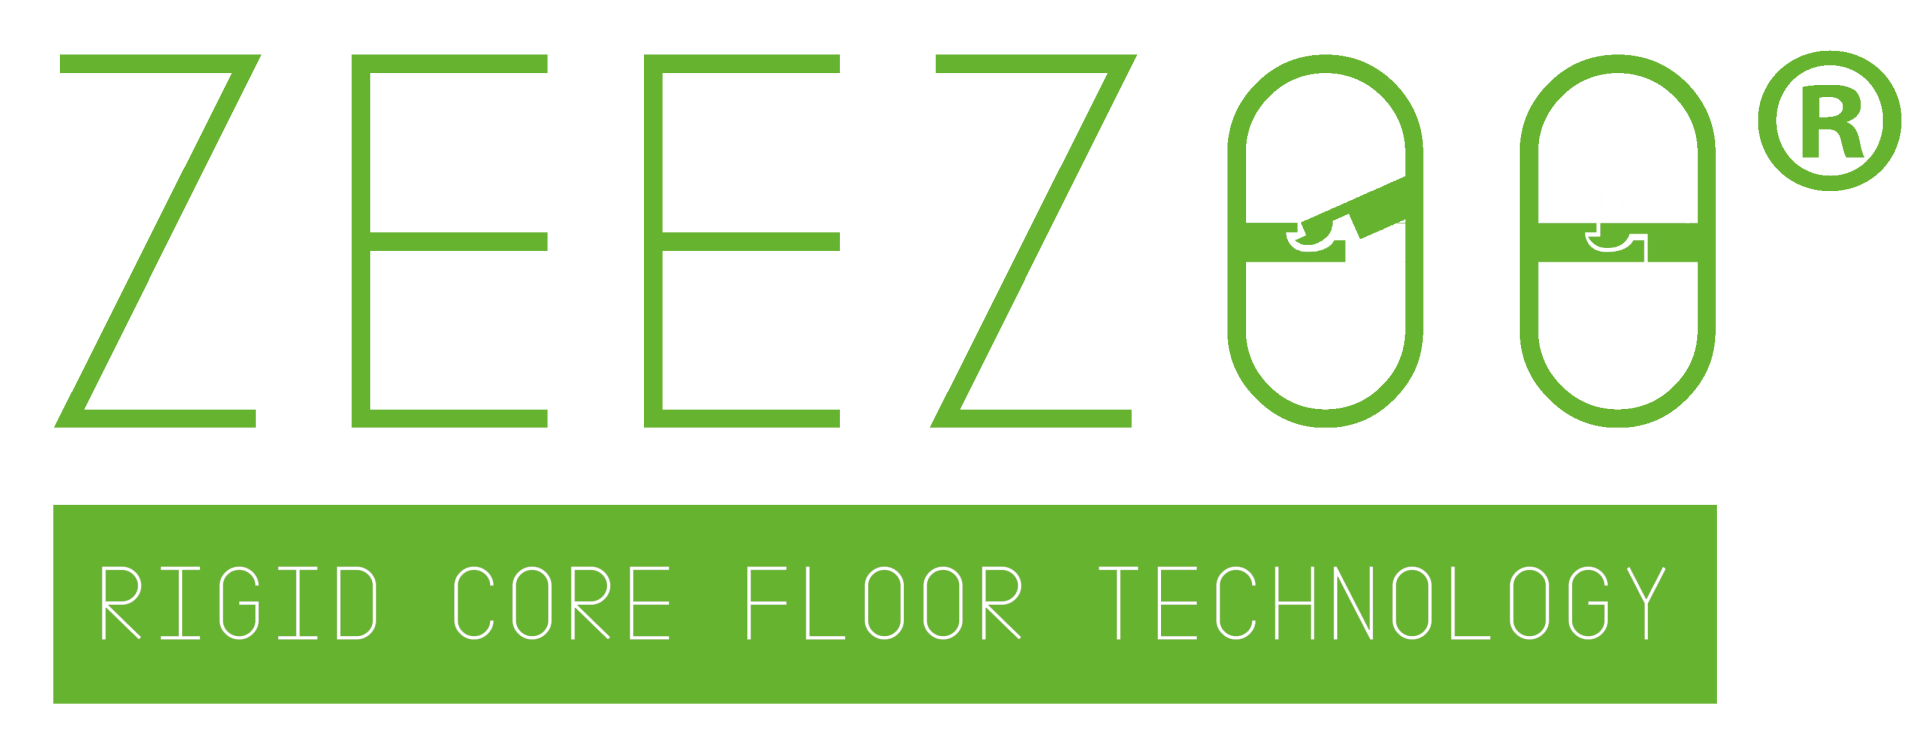 Zeezoo rigid core click system vinyl flooring colour Burnt Hickory - Image 4 of 7